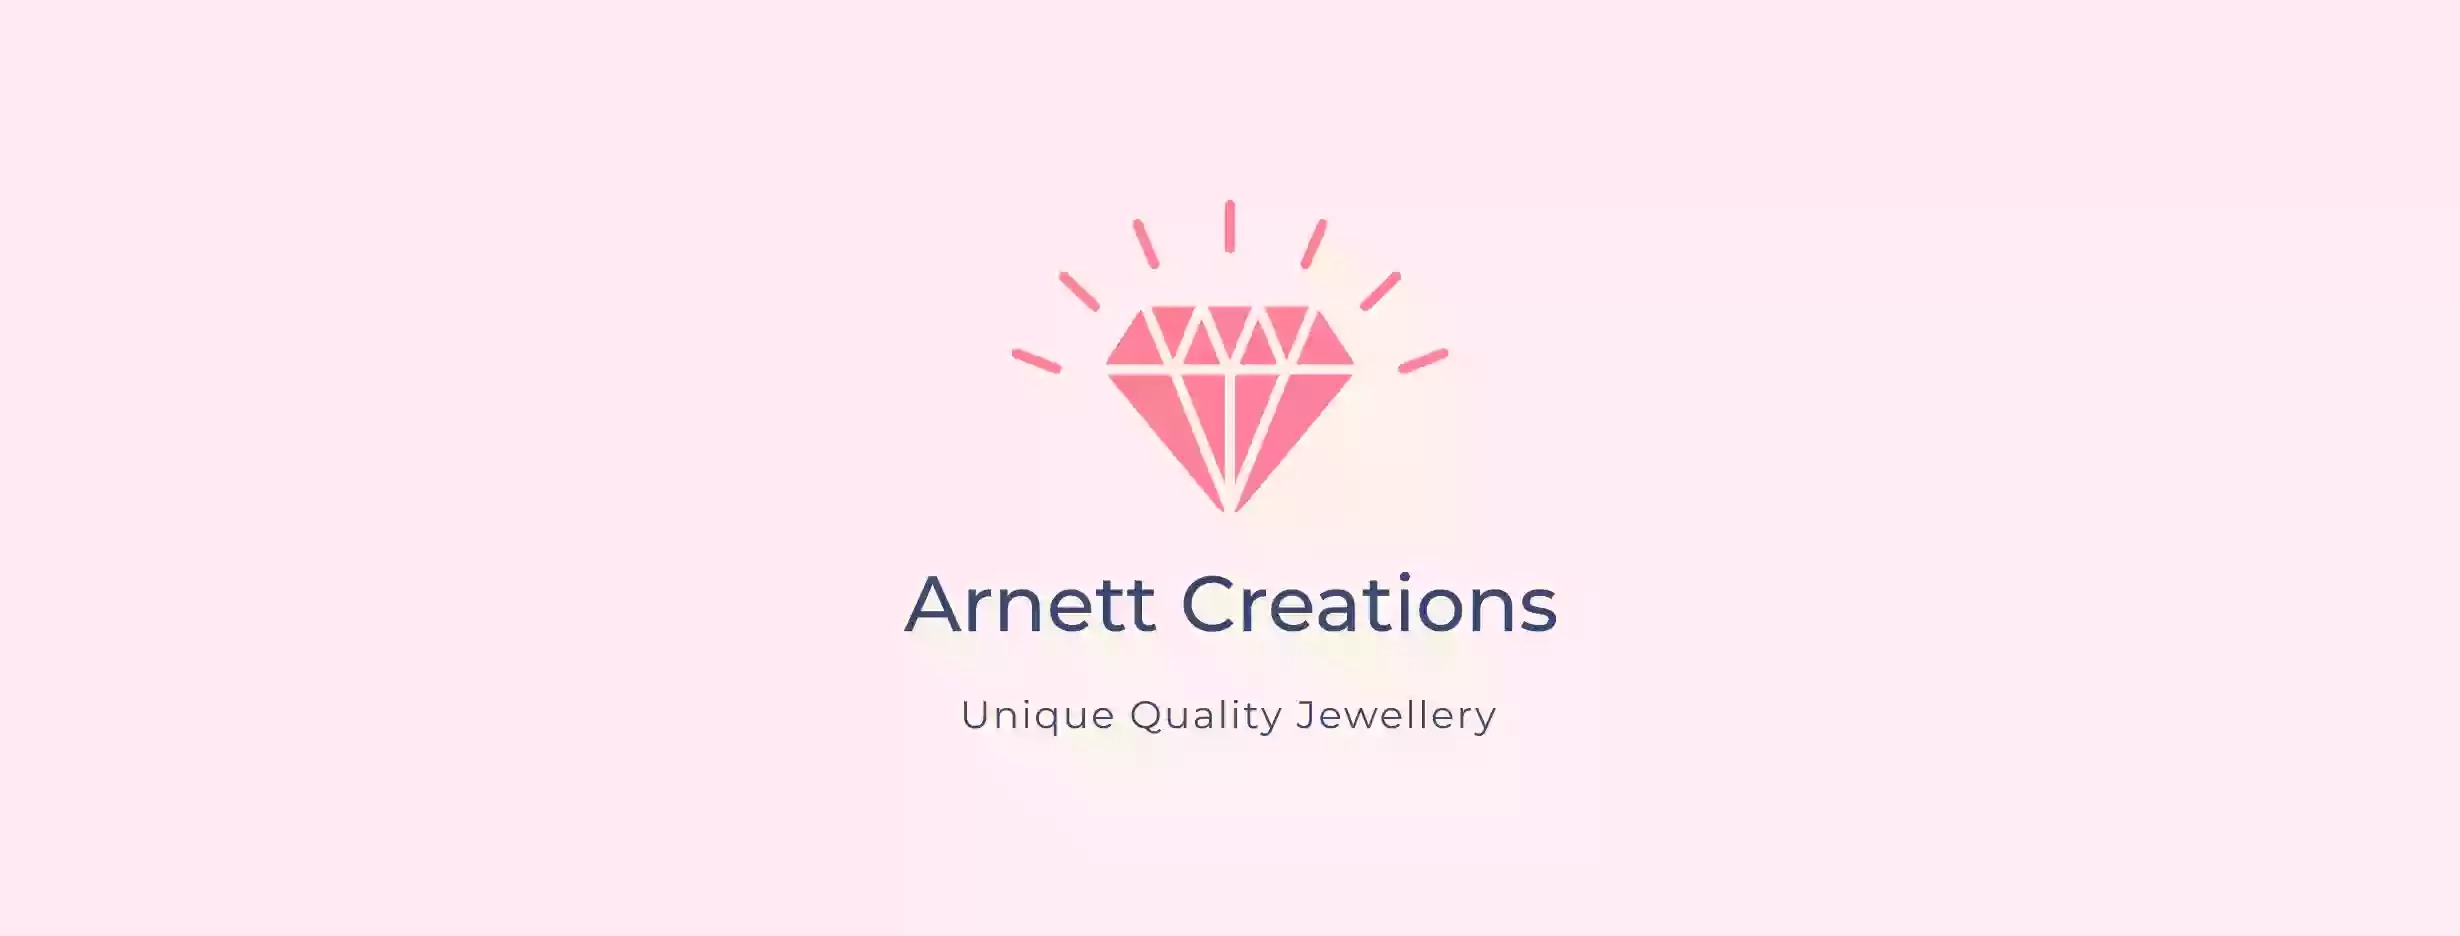 Arnett Creations - Unique Quality Jewellery